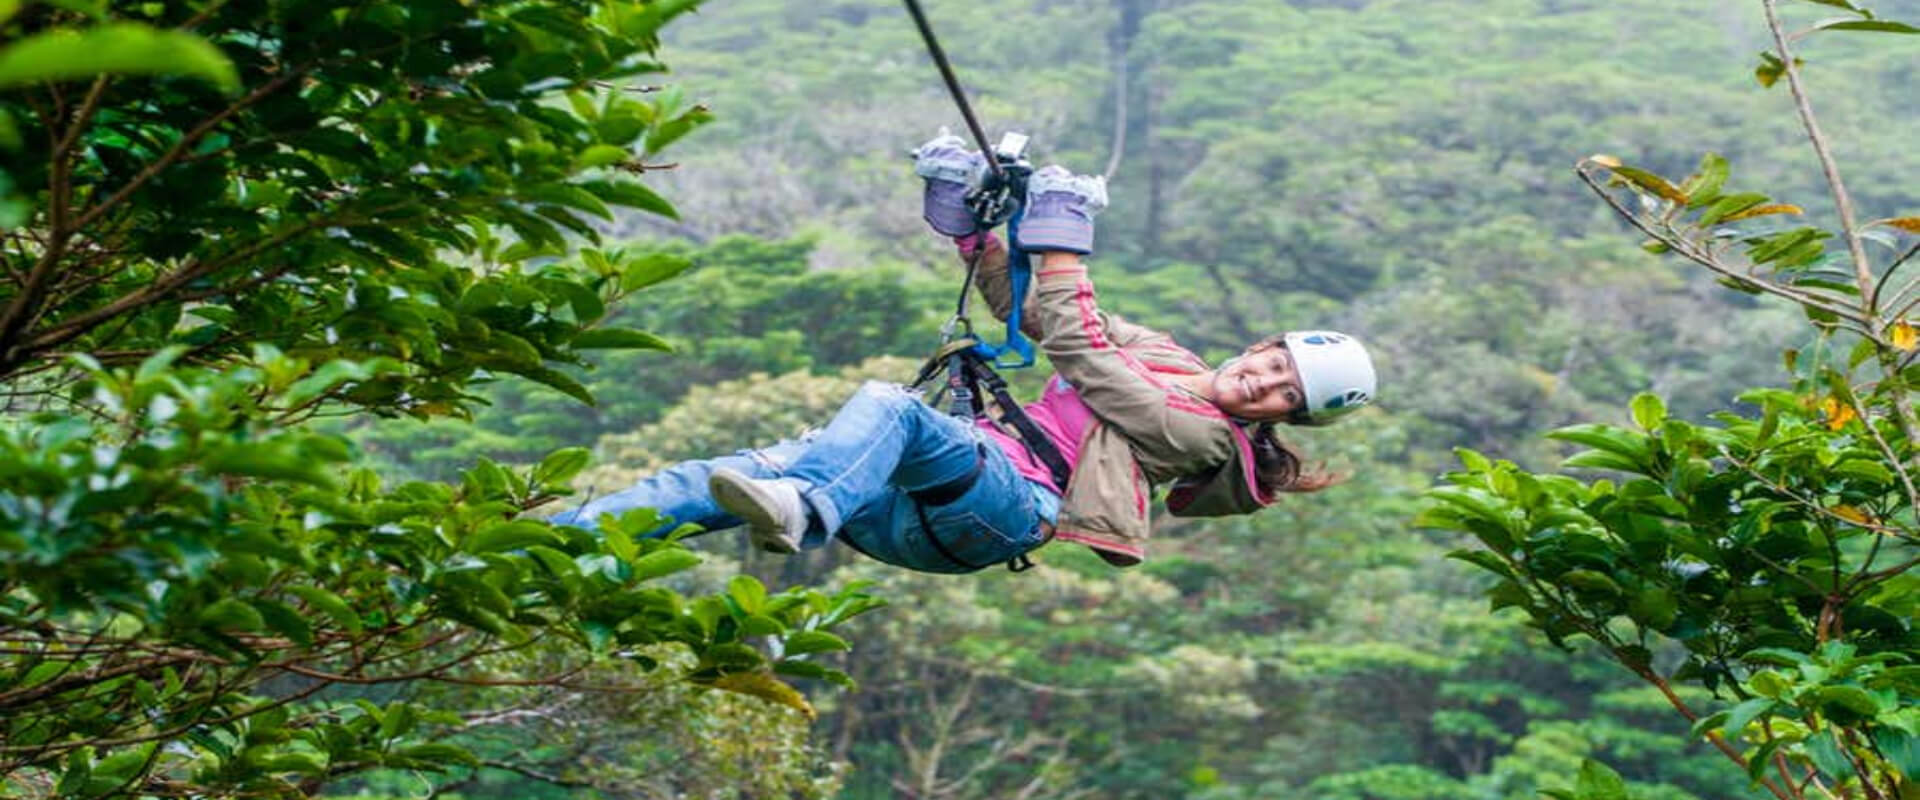 Teleférico en bosque lluvioso del Pacífico | Costa Rica Jade Tours